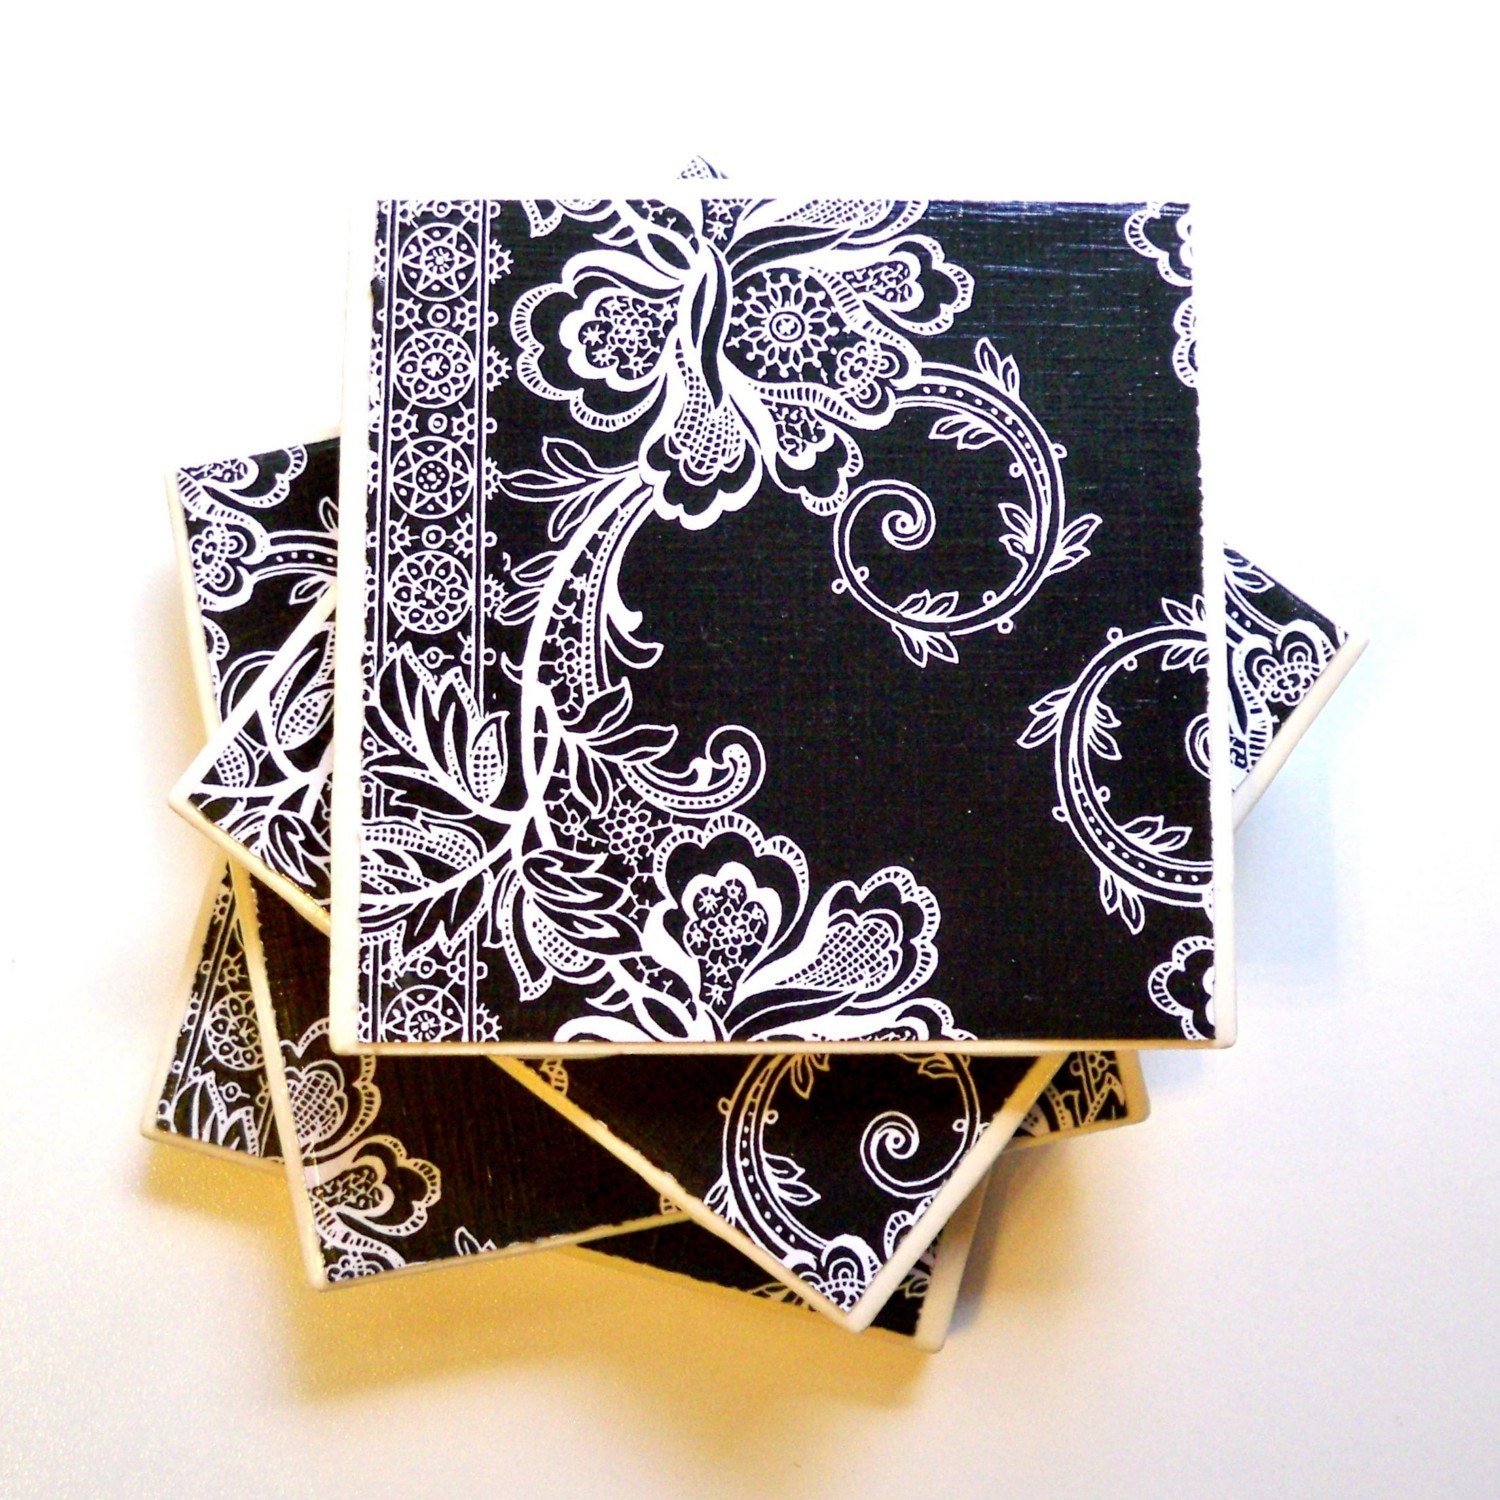 Ceramic Tile Coasters Set of Four, Classic Black and White